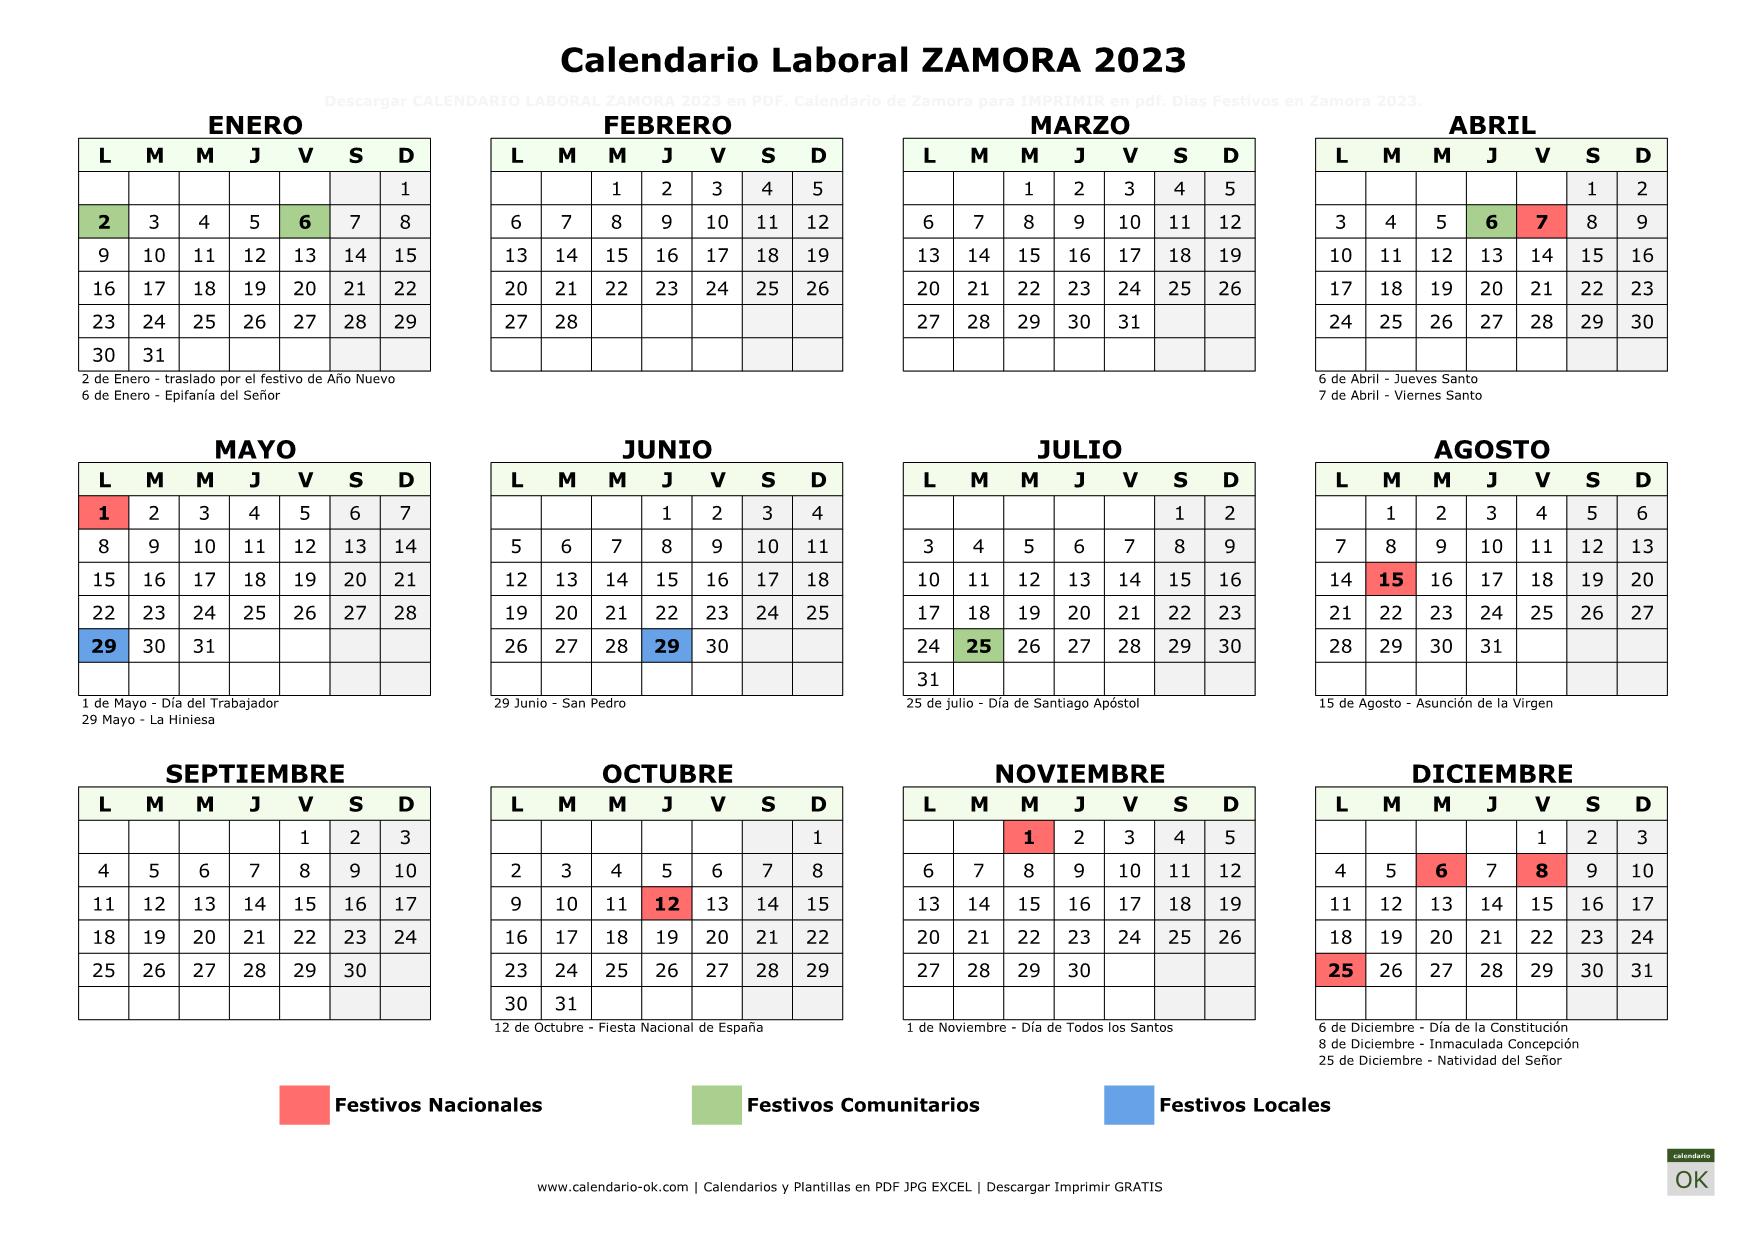 Calendario Laboral Zamora 2023 horizontal